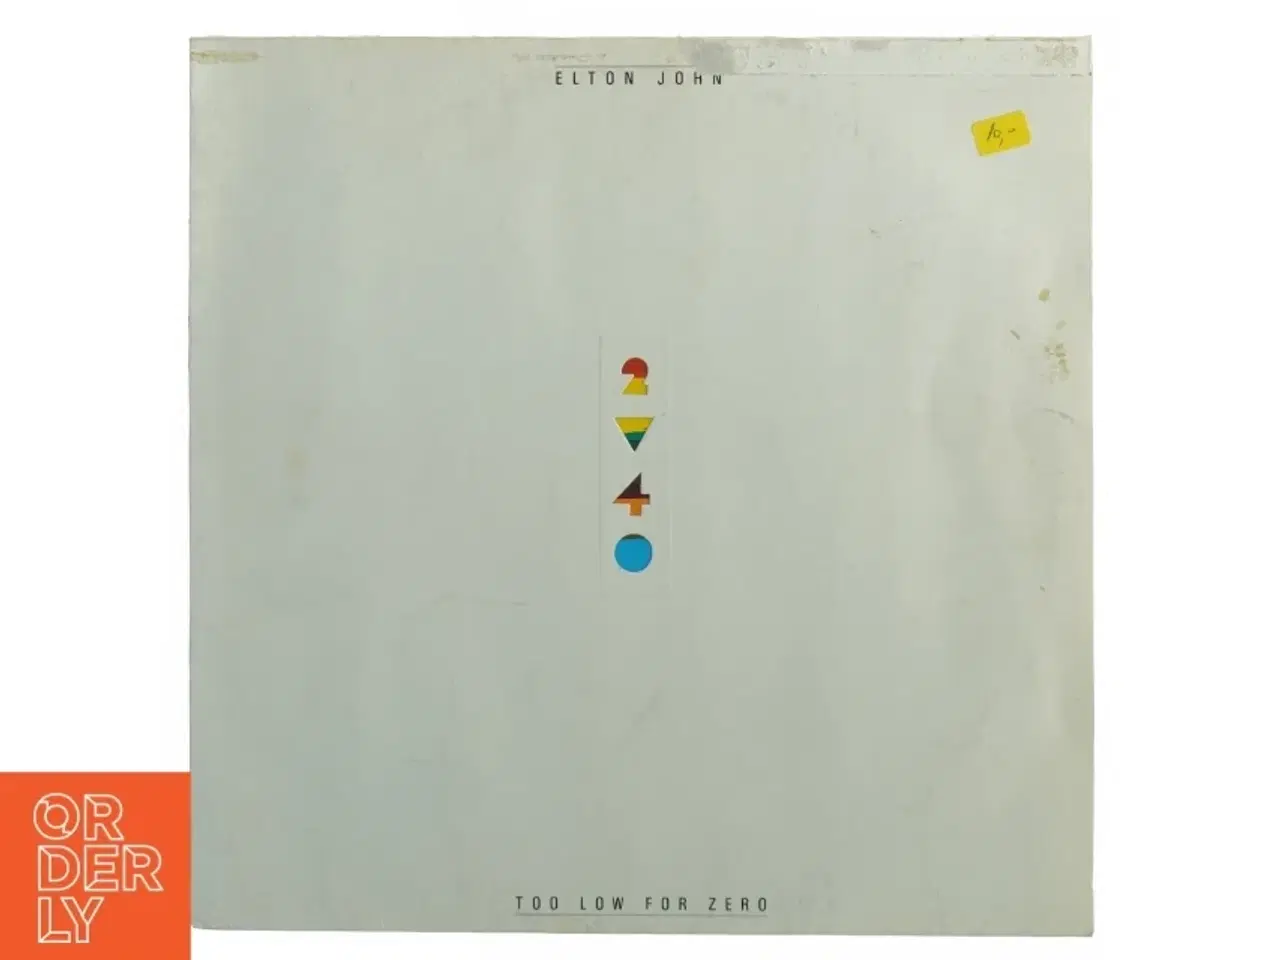 Billede 1 - Elton John - Too Low For Zero LP fra Rocket Record Company (str. 31 x 31 cm)